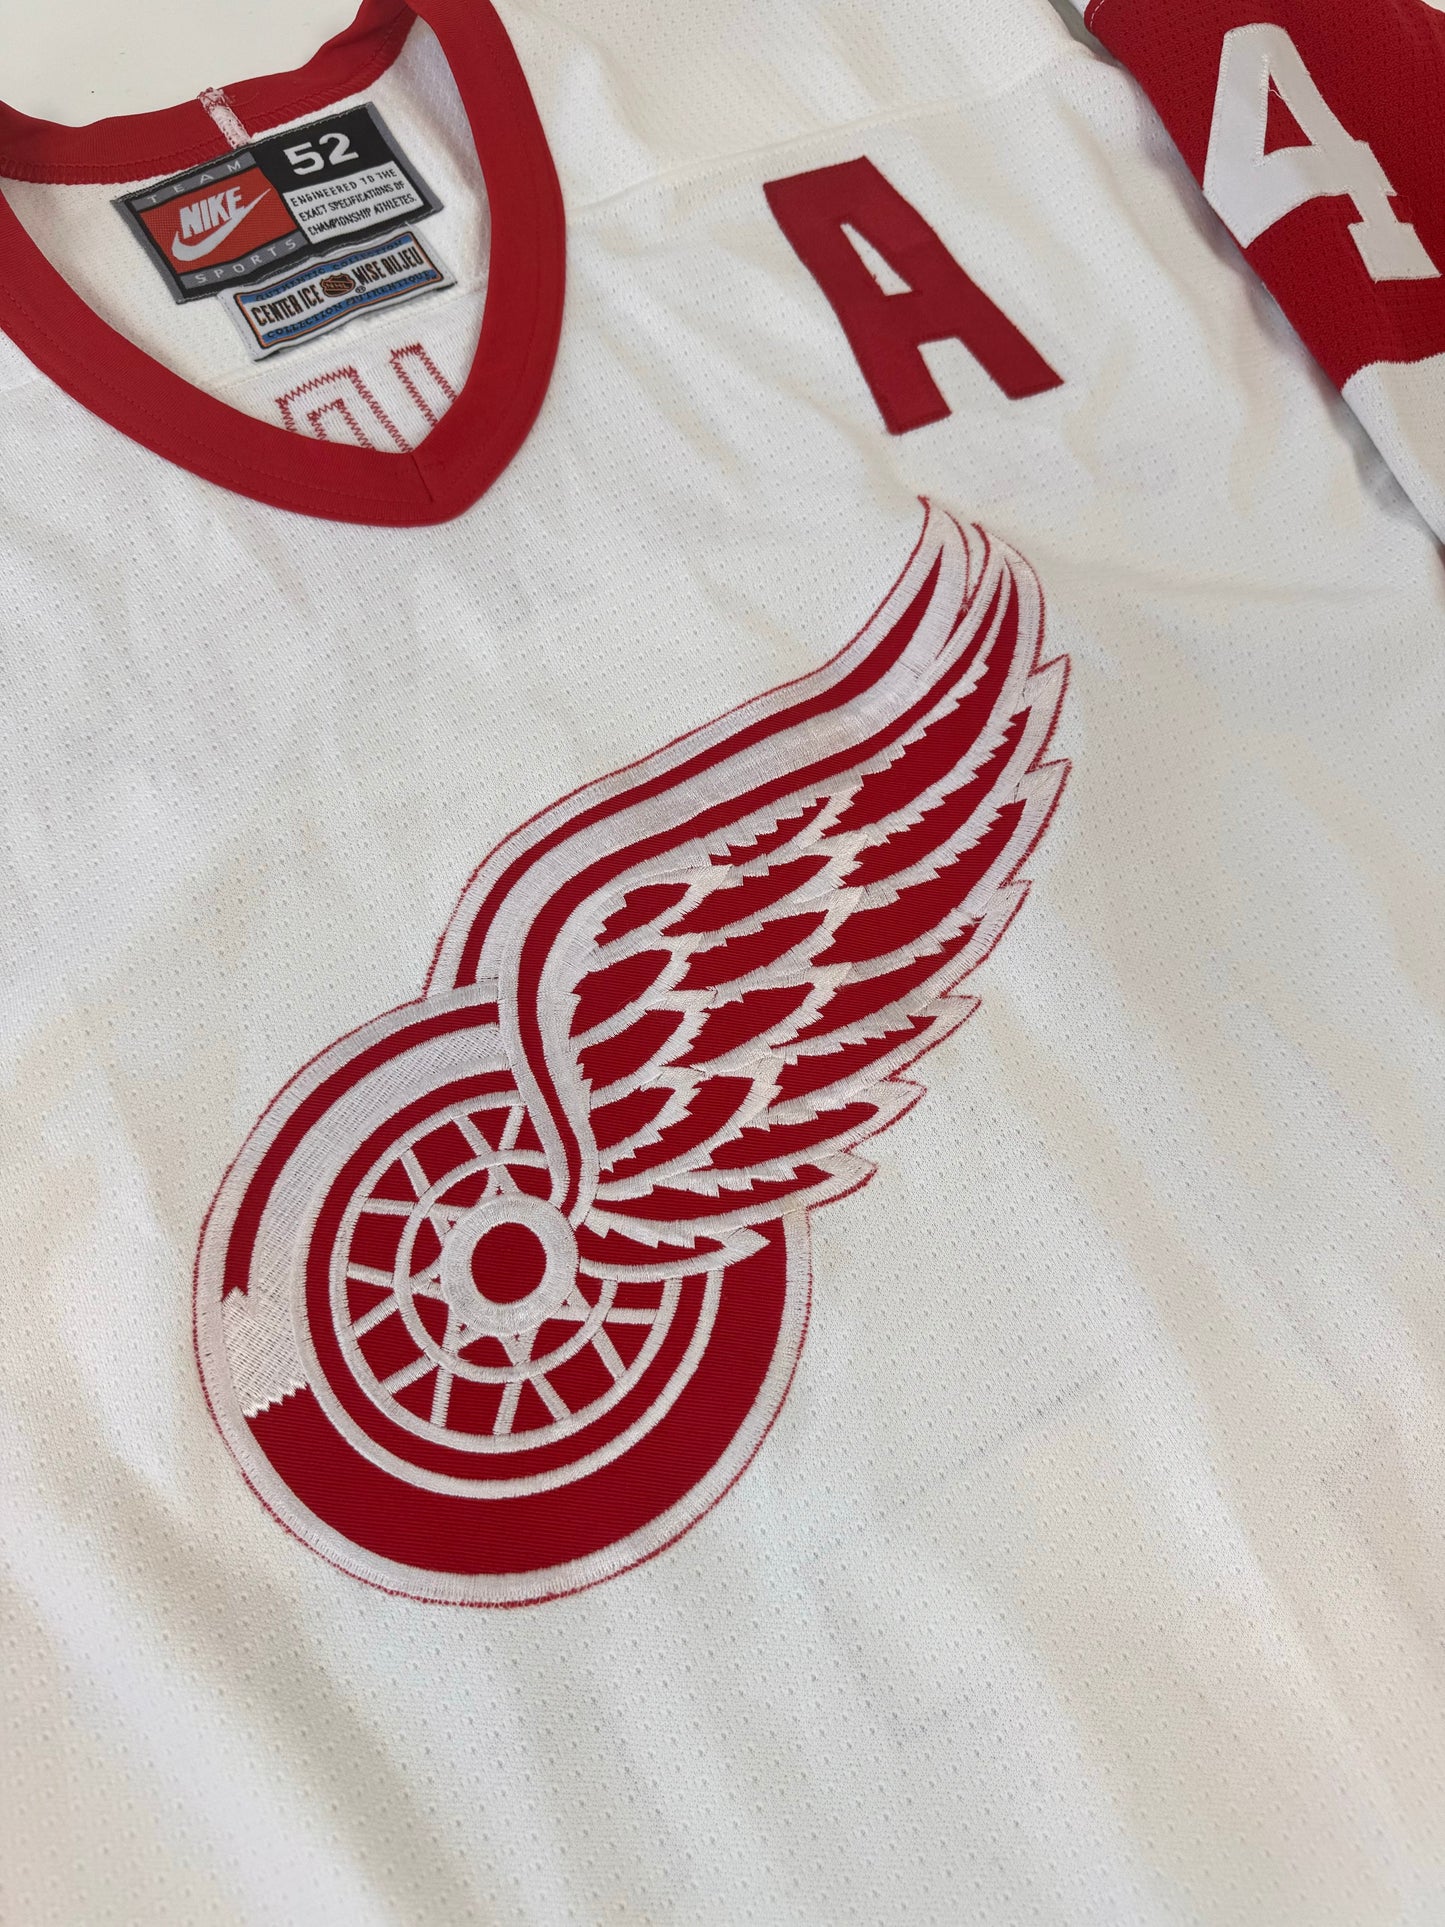 Detroit Red Wings 1996-1999 Brendan Shanahan NHL Hockey Jersey (52/XL)